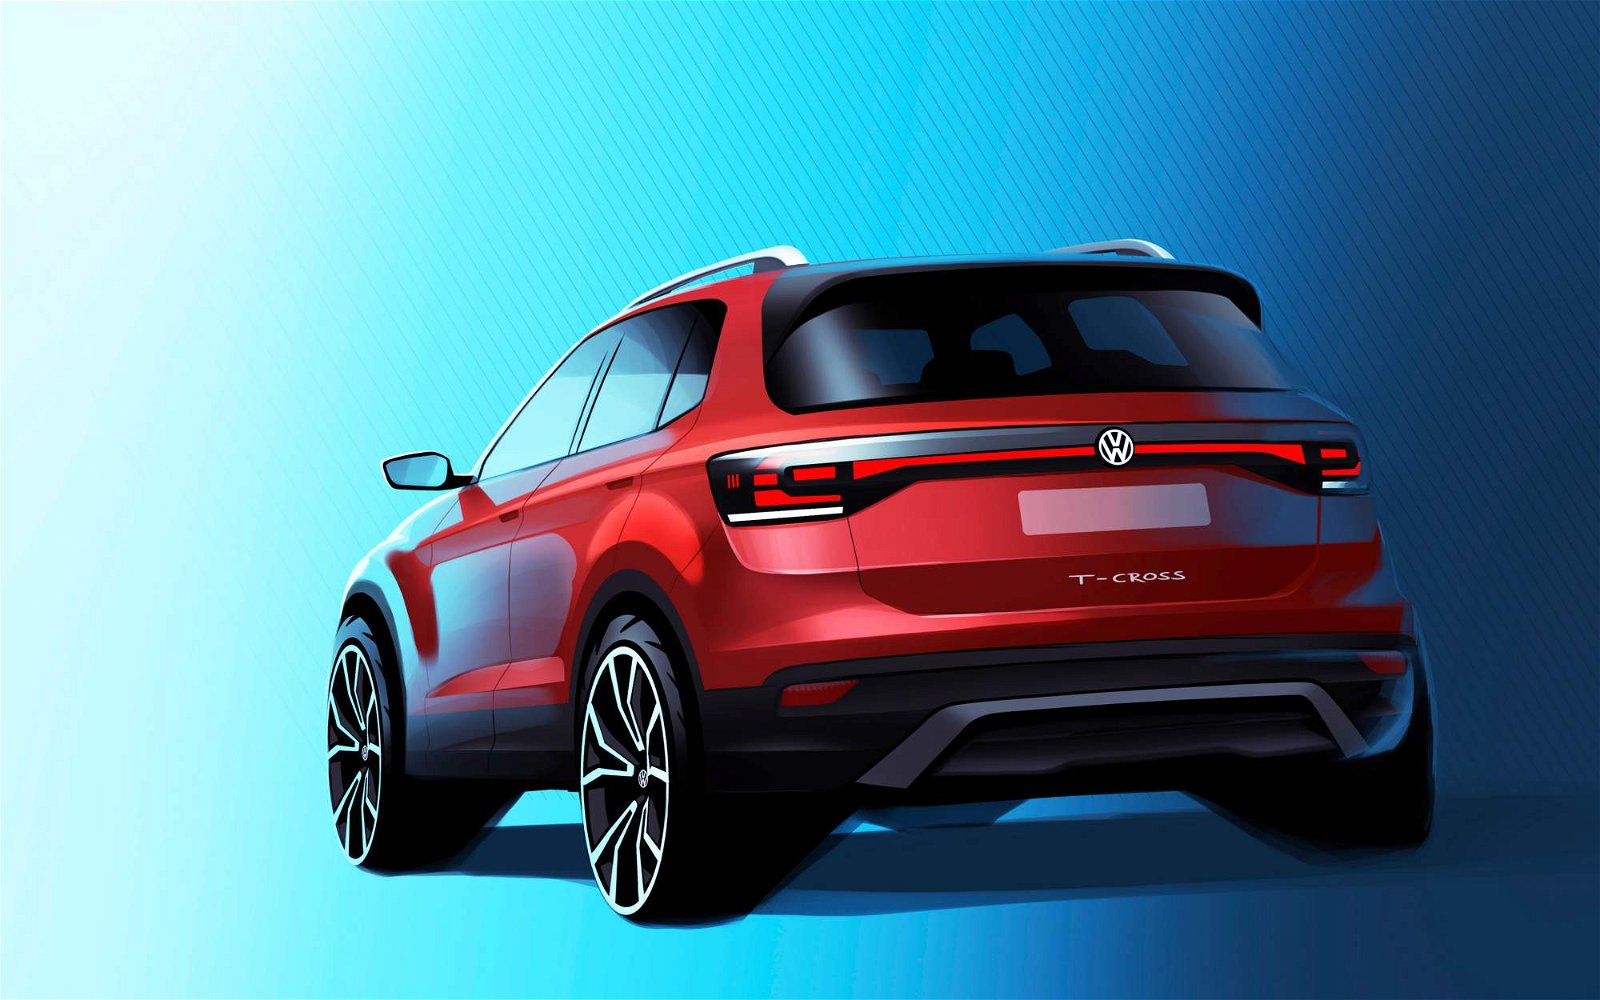 VW-T-Cross-official-rendering